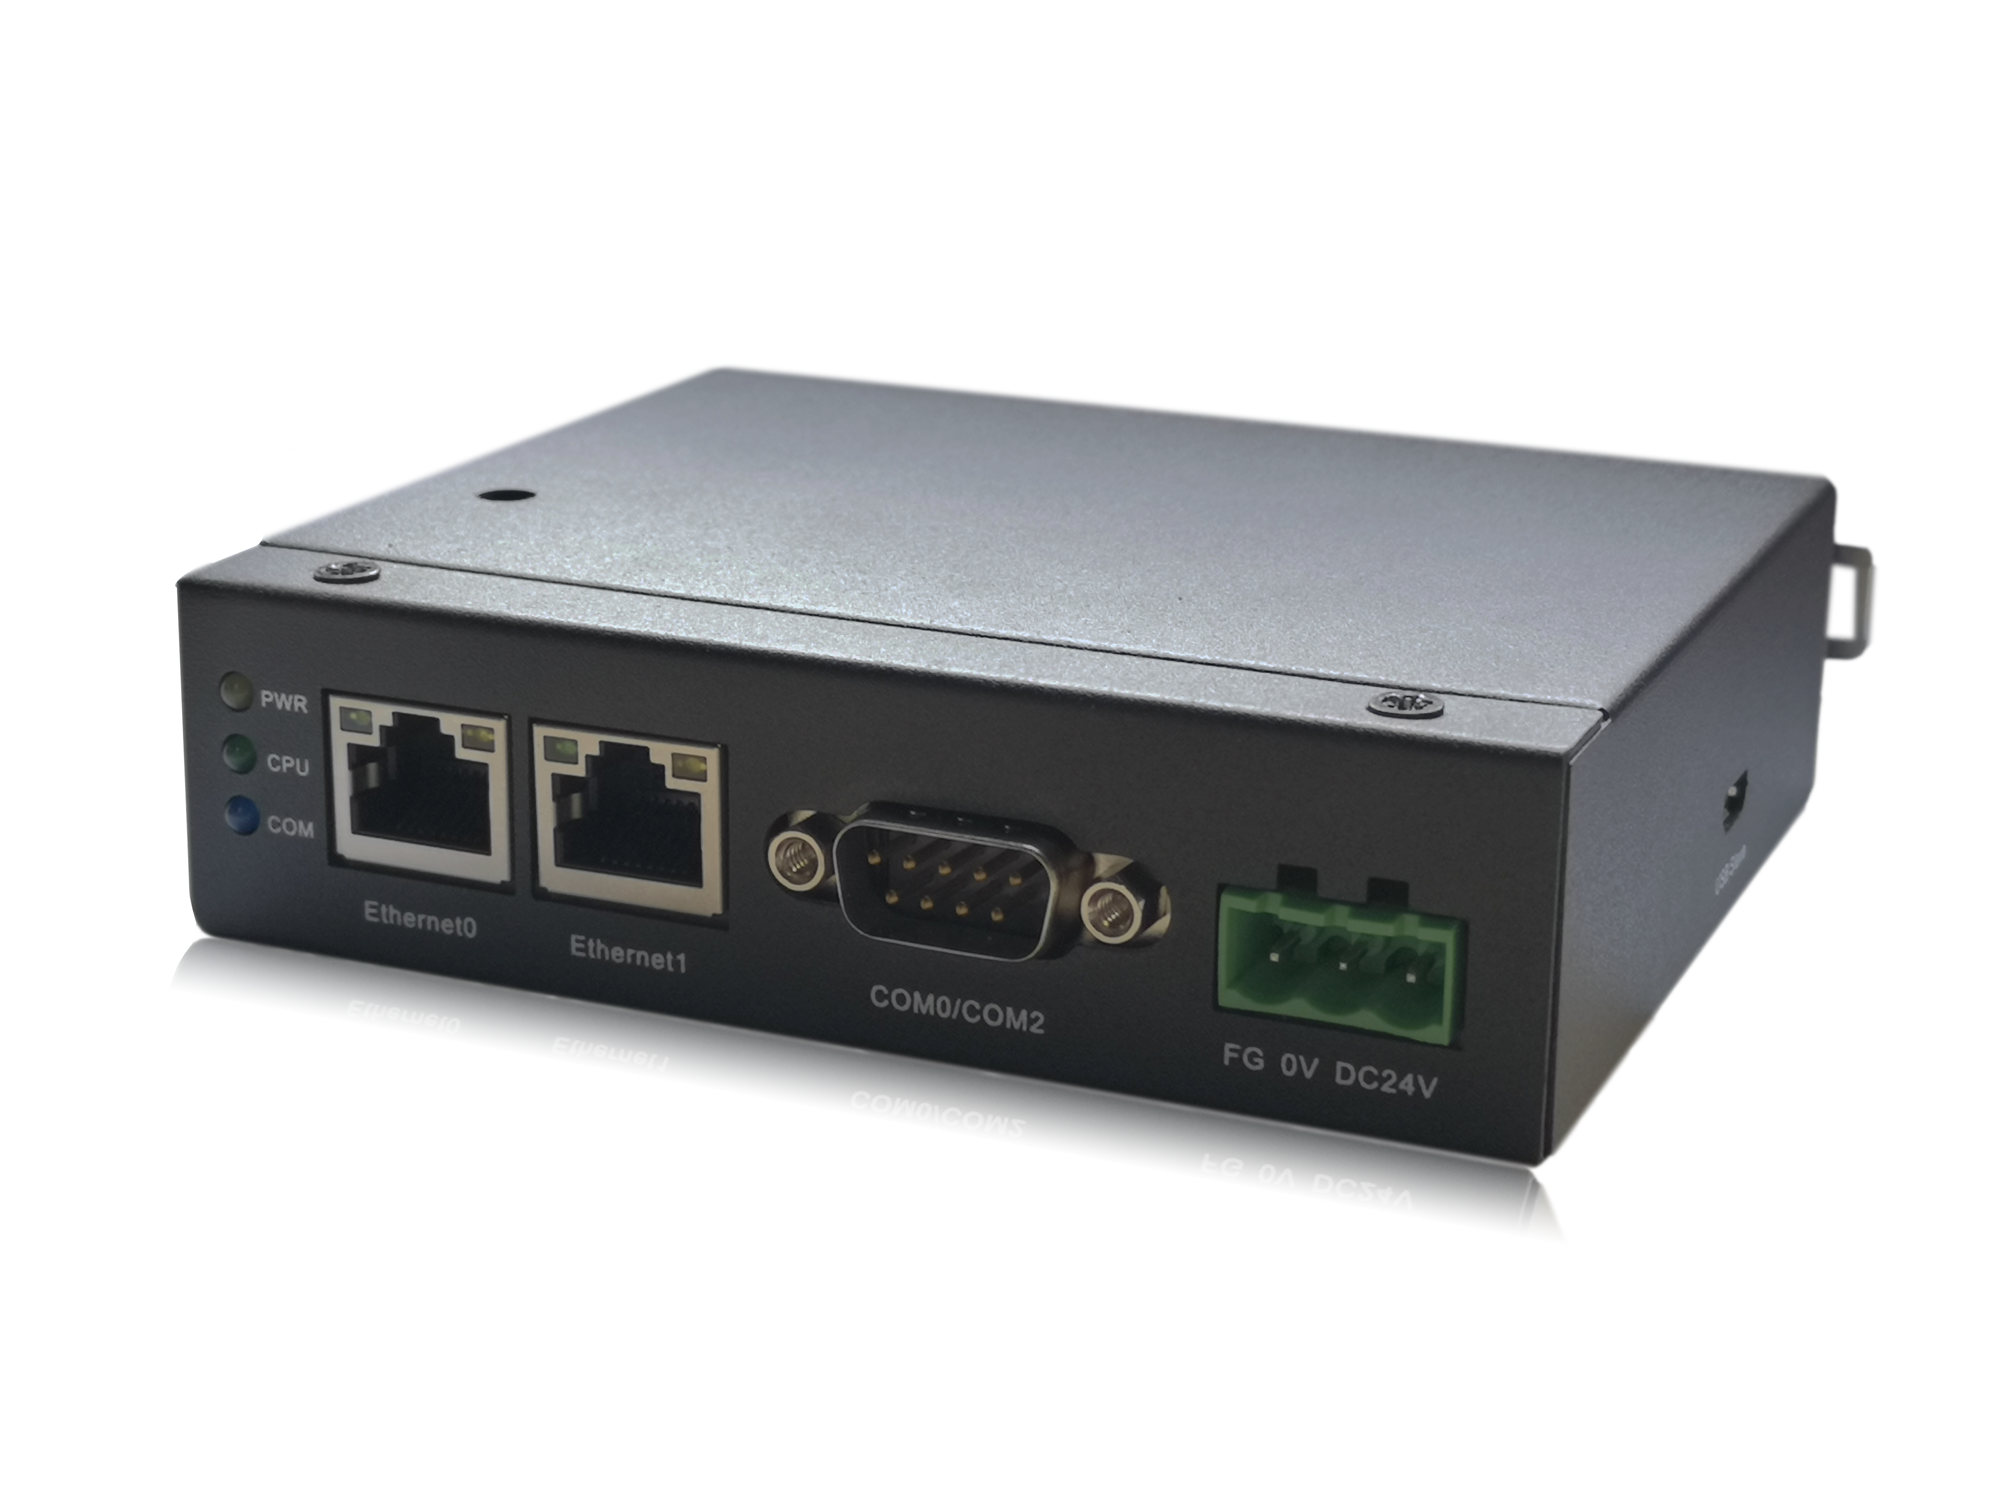 Kinco GW01 IoT Series Remote Service HMI with Ethernet